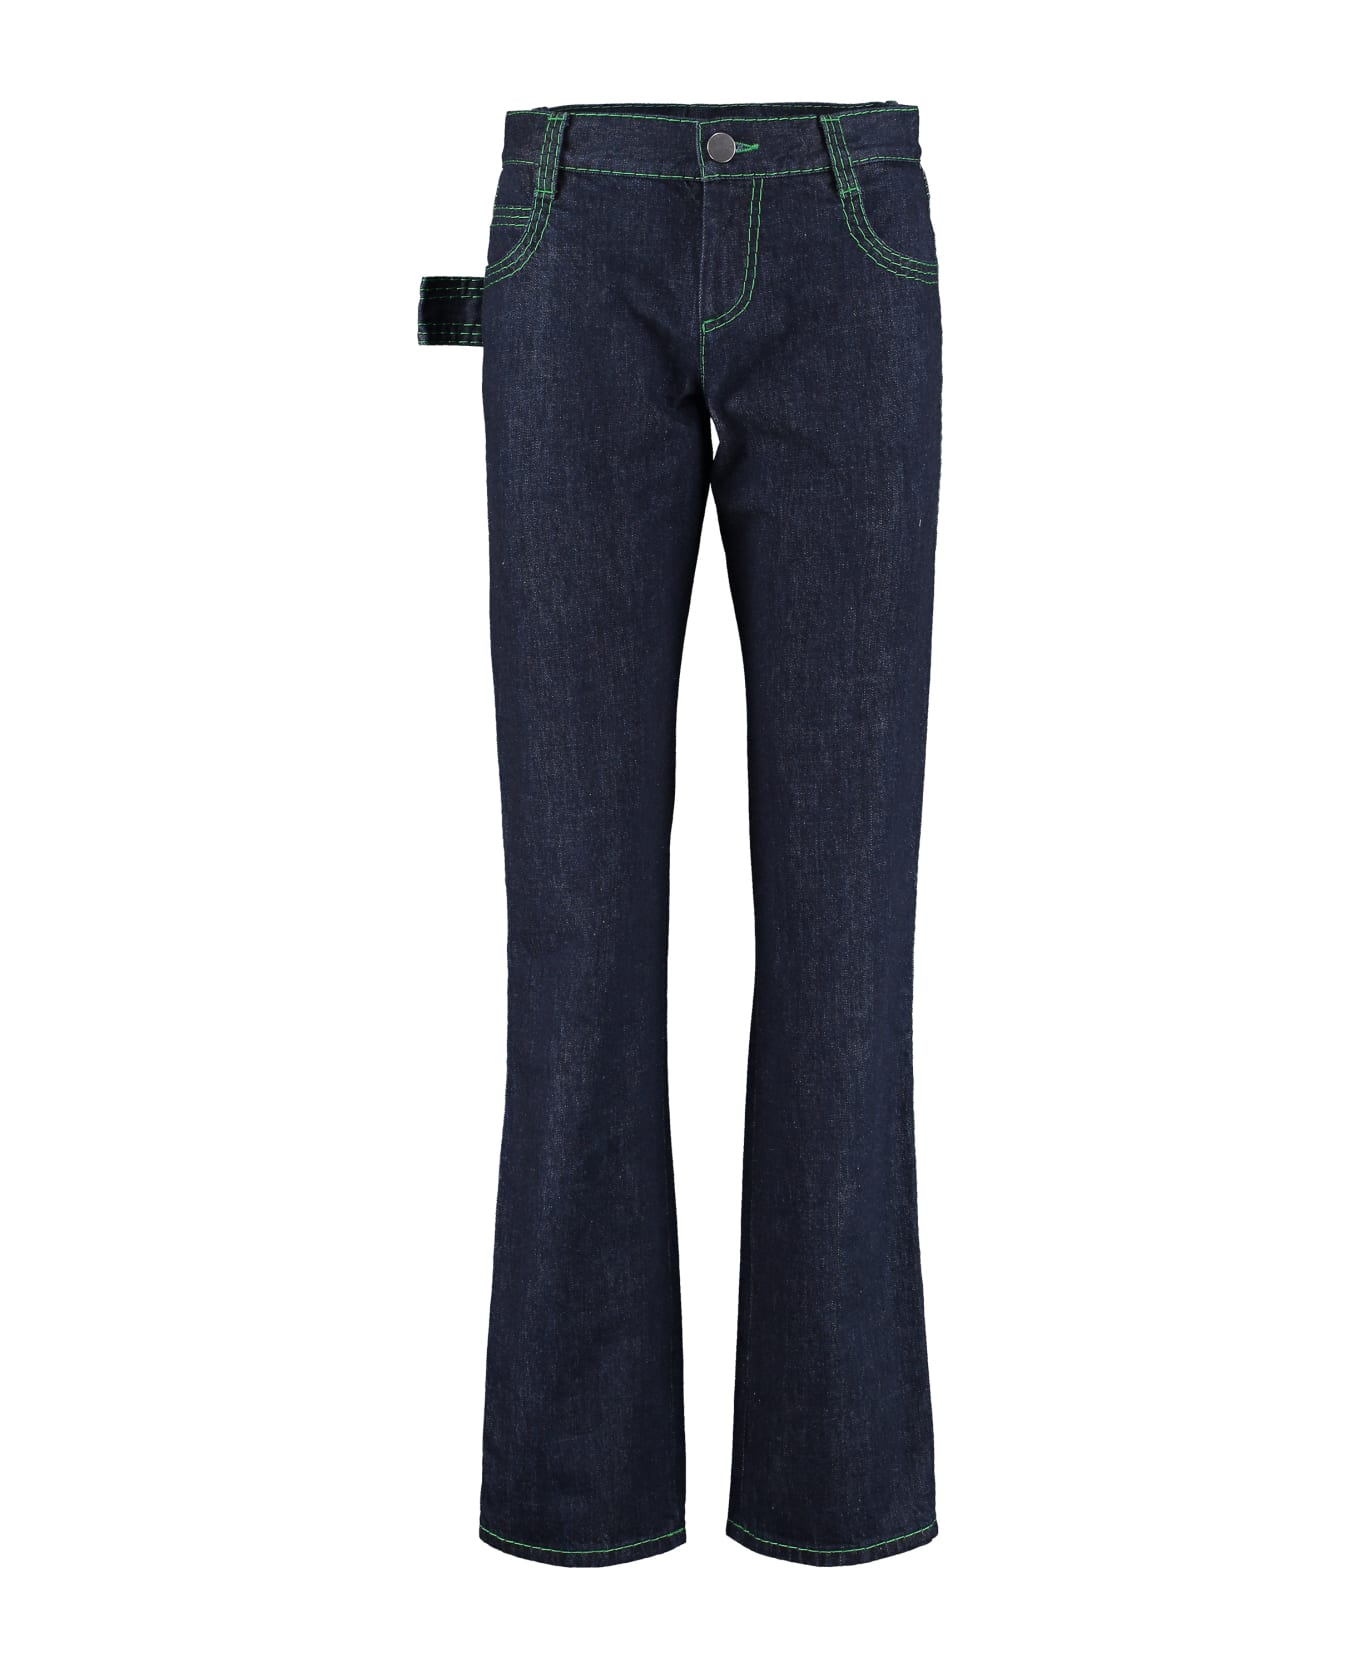 Bottega Veneta 5-pocket Jeans - Denim